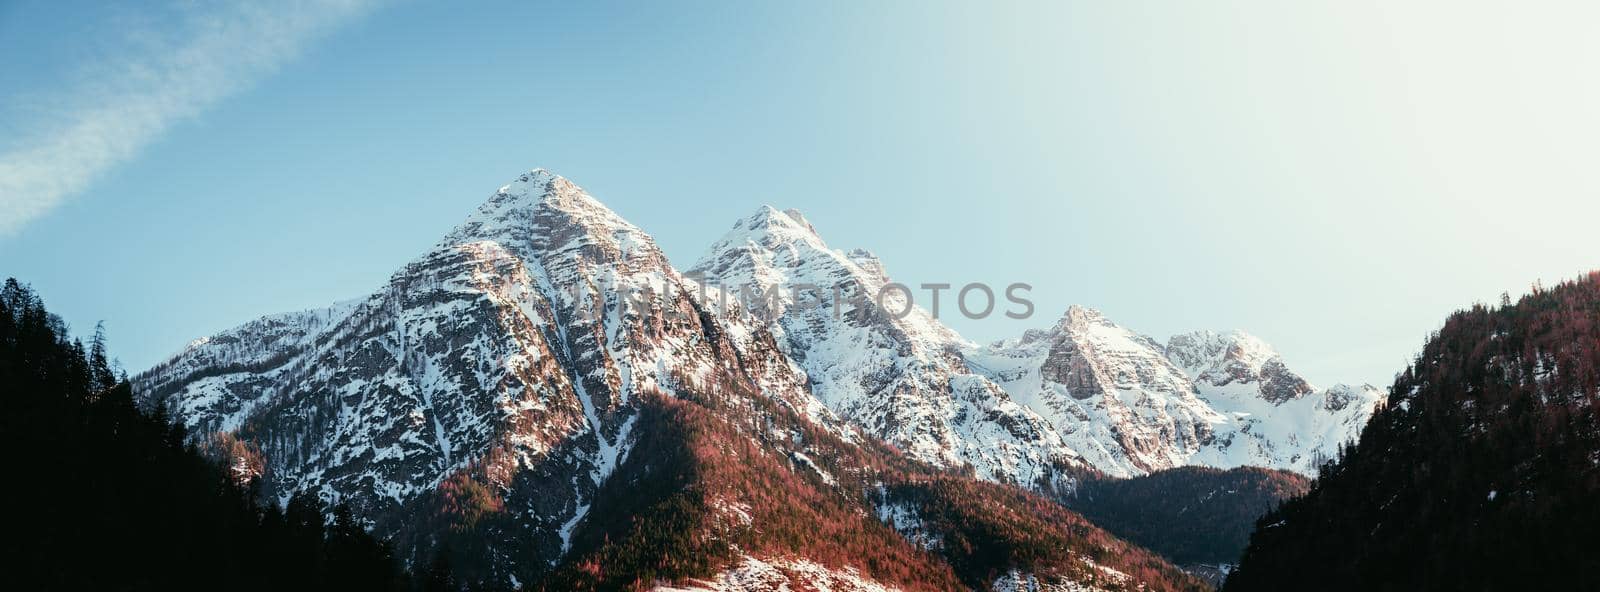 Idyllic snowy mountain peaks, landscape, Alps, Austria